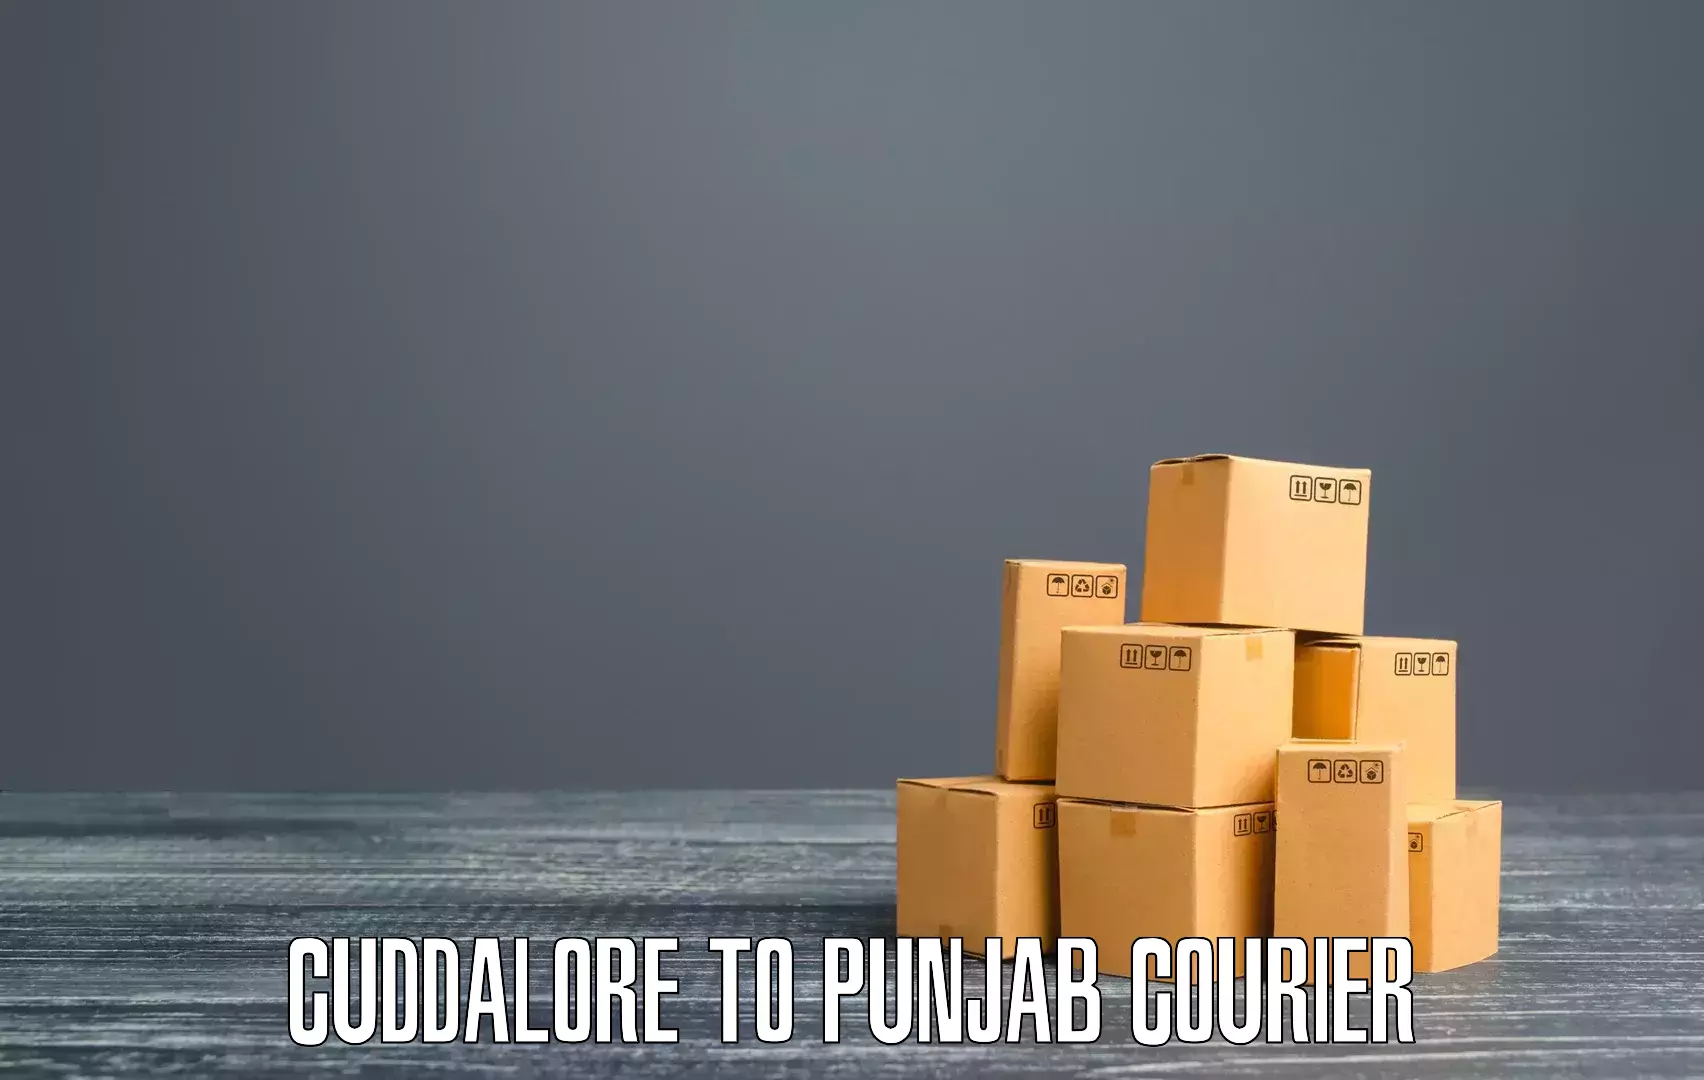 Advanced shipping network Cuddalore to Bathinda